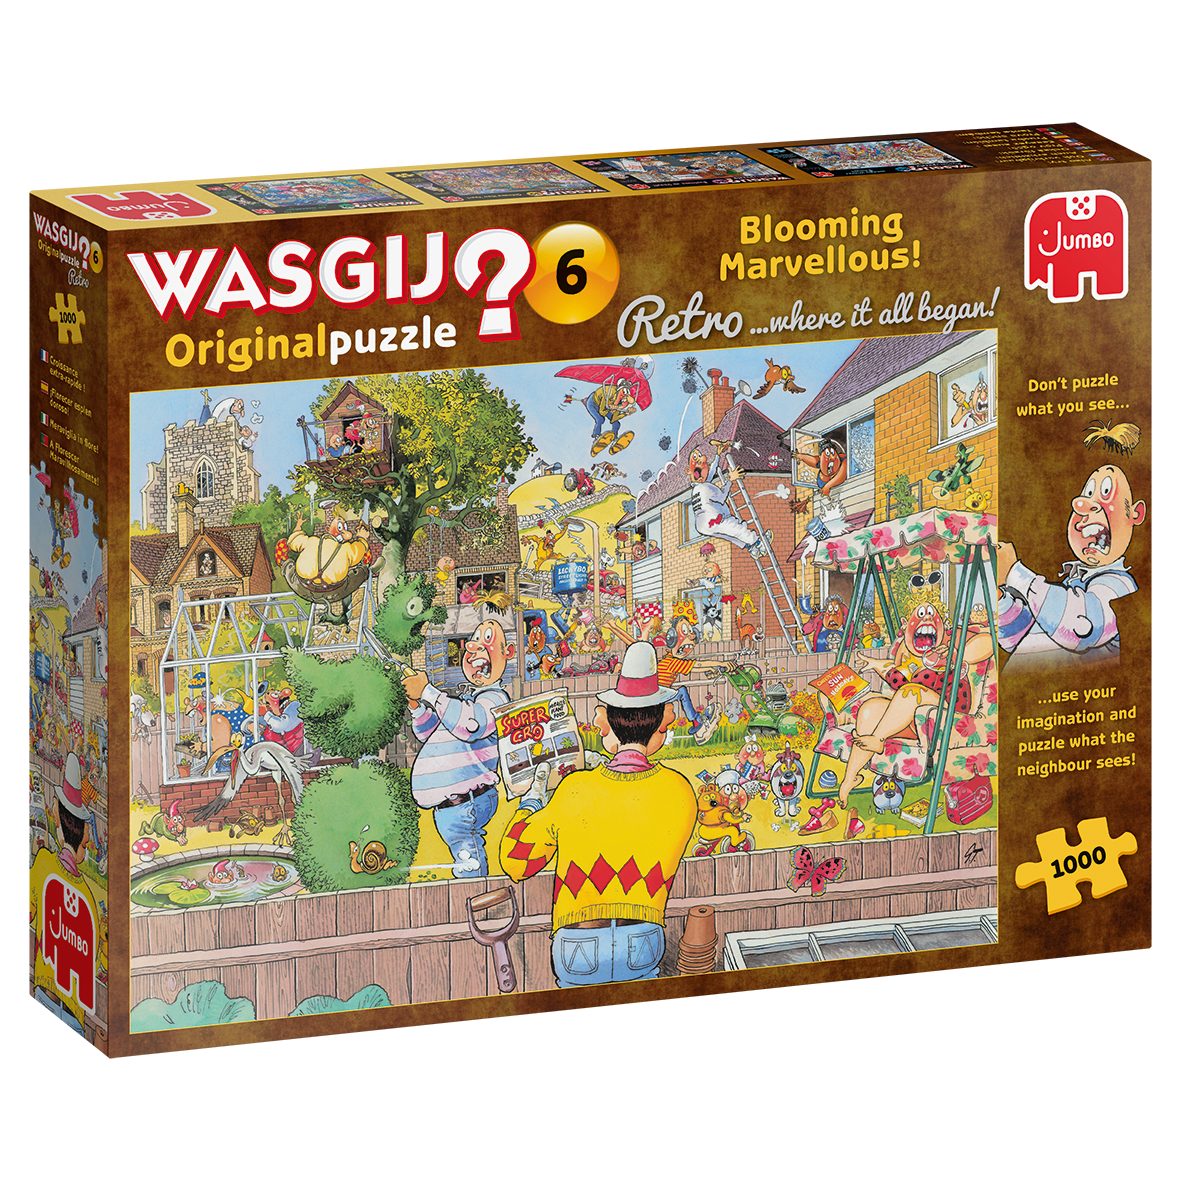 Puzzle 1000 Retro Europe in Große Gartenfreunde, Wasgij Jumbo Puzzleteile, Original 6 Spiele Made